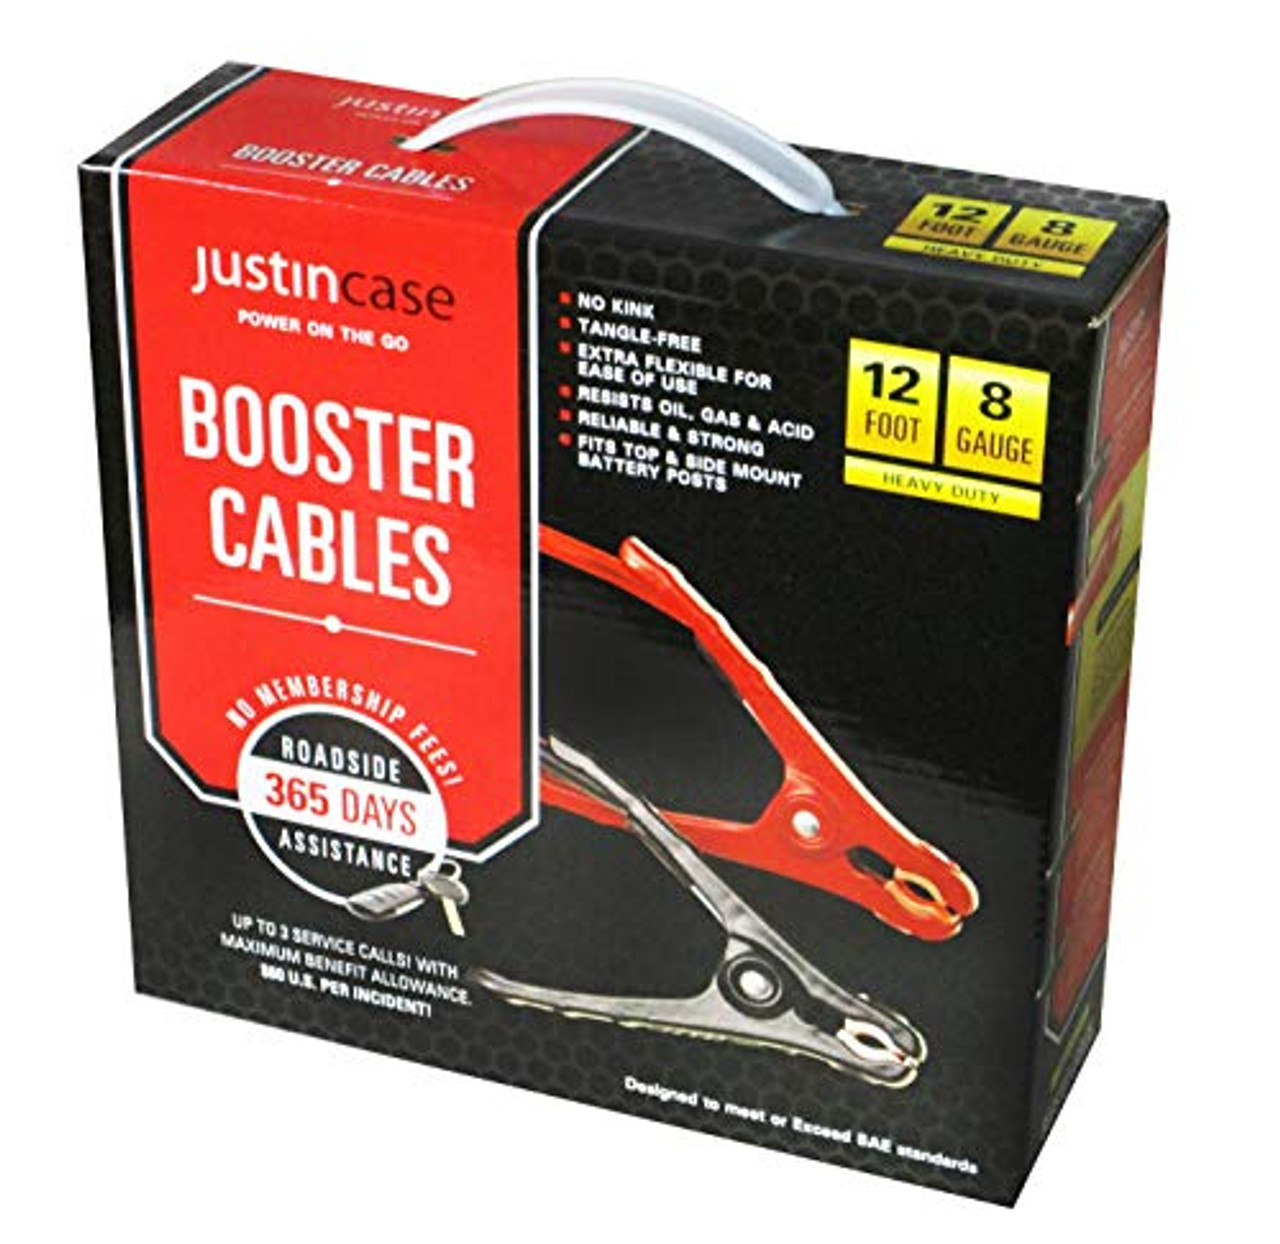 Justin Case jcbc1208 12 フィート ゲージ高耐久ブースター ケーブル JB Tools